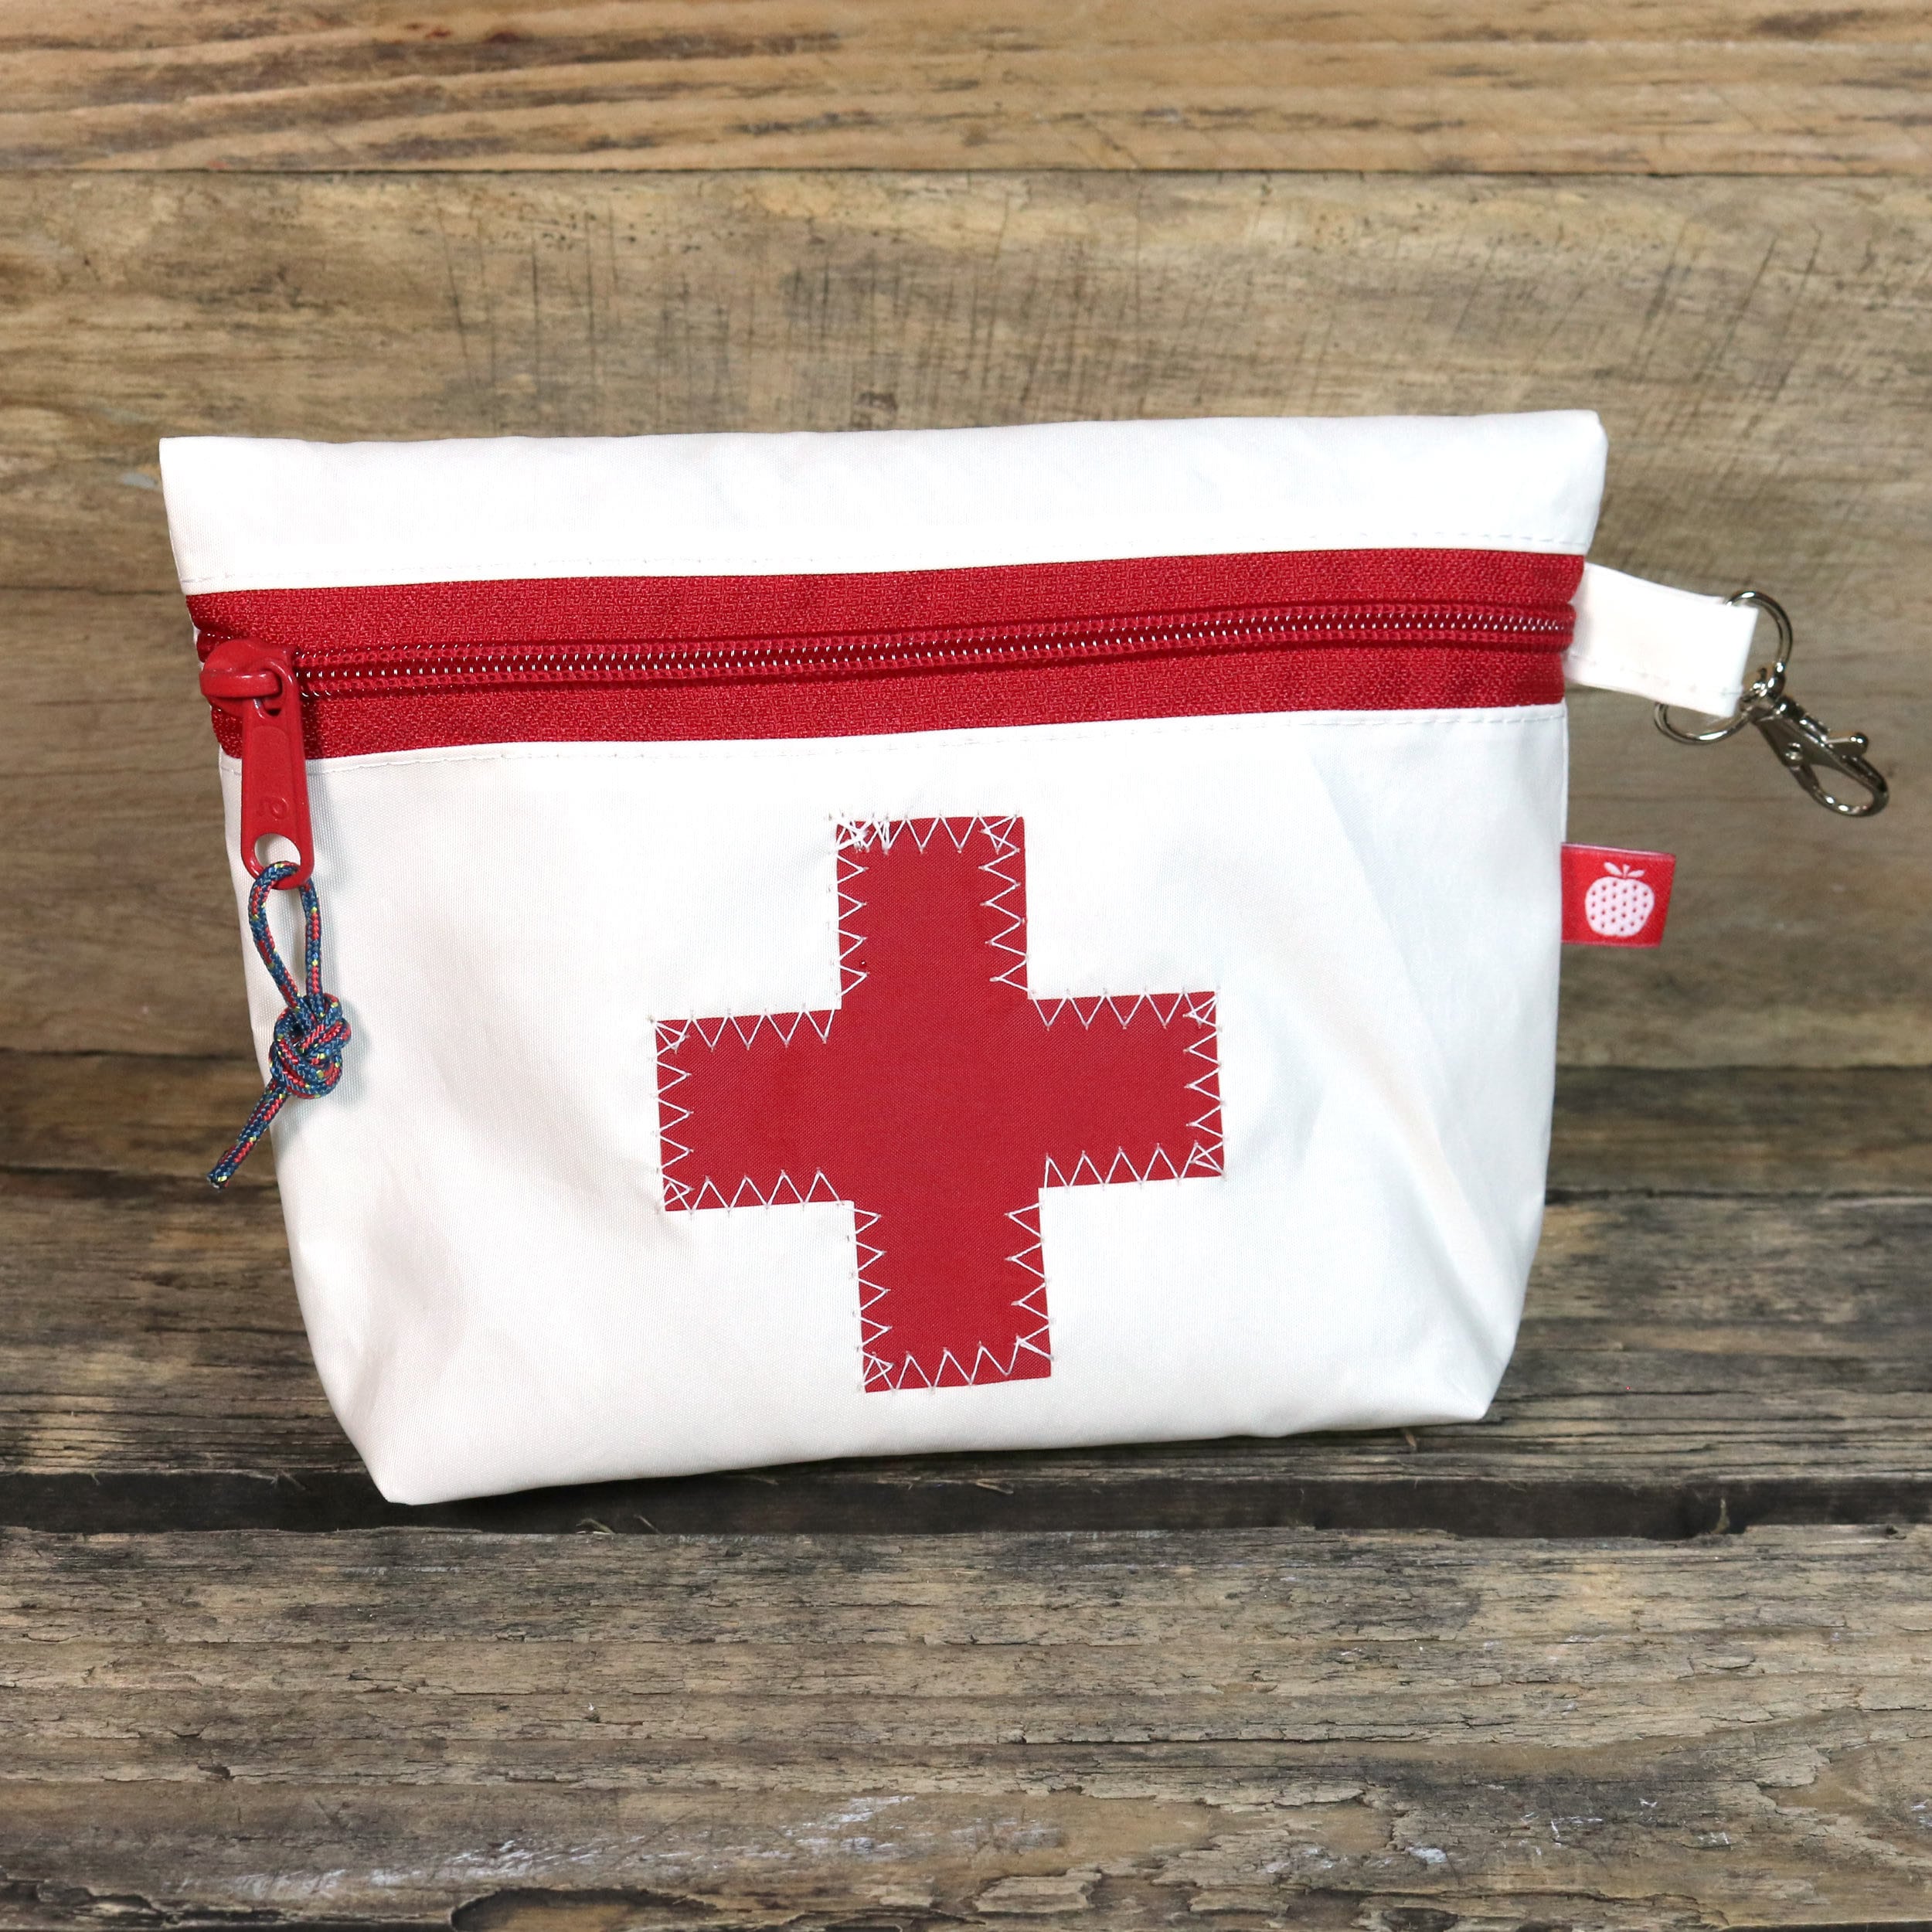 Travel First Aid Kit Medicine Bag Plaster Bag Made of Sail -  Denmark